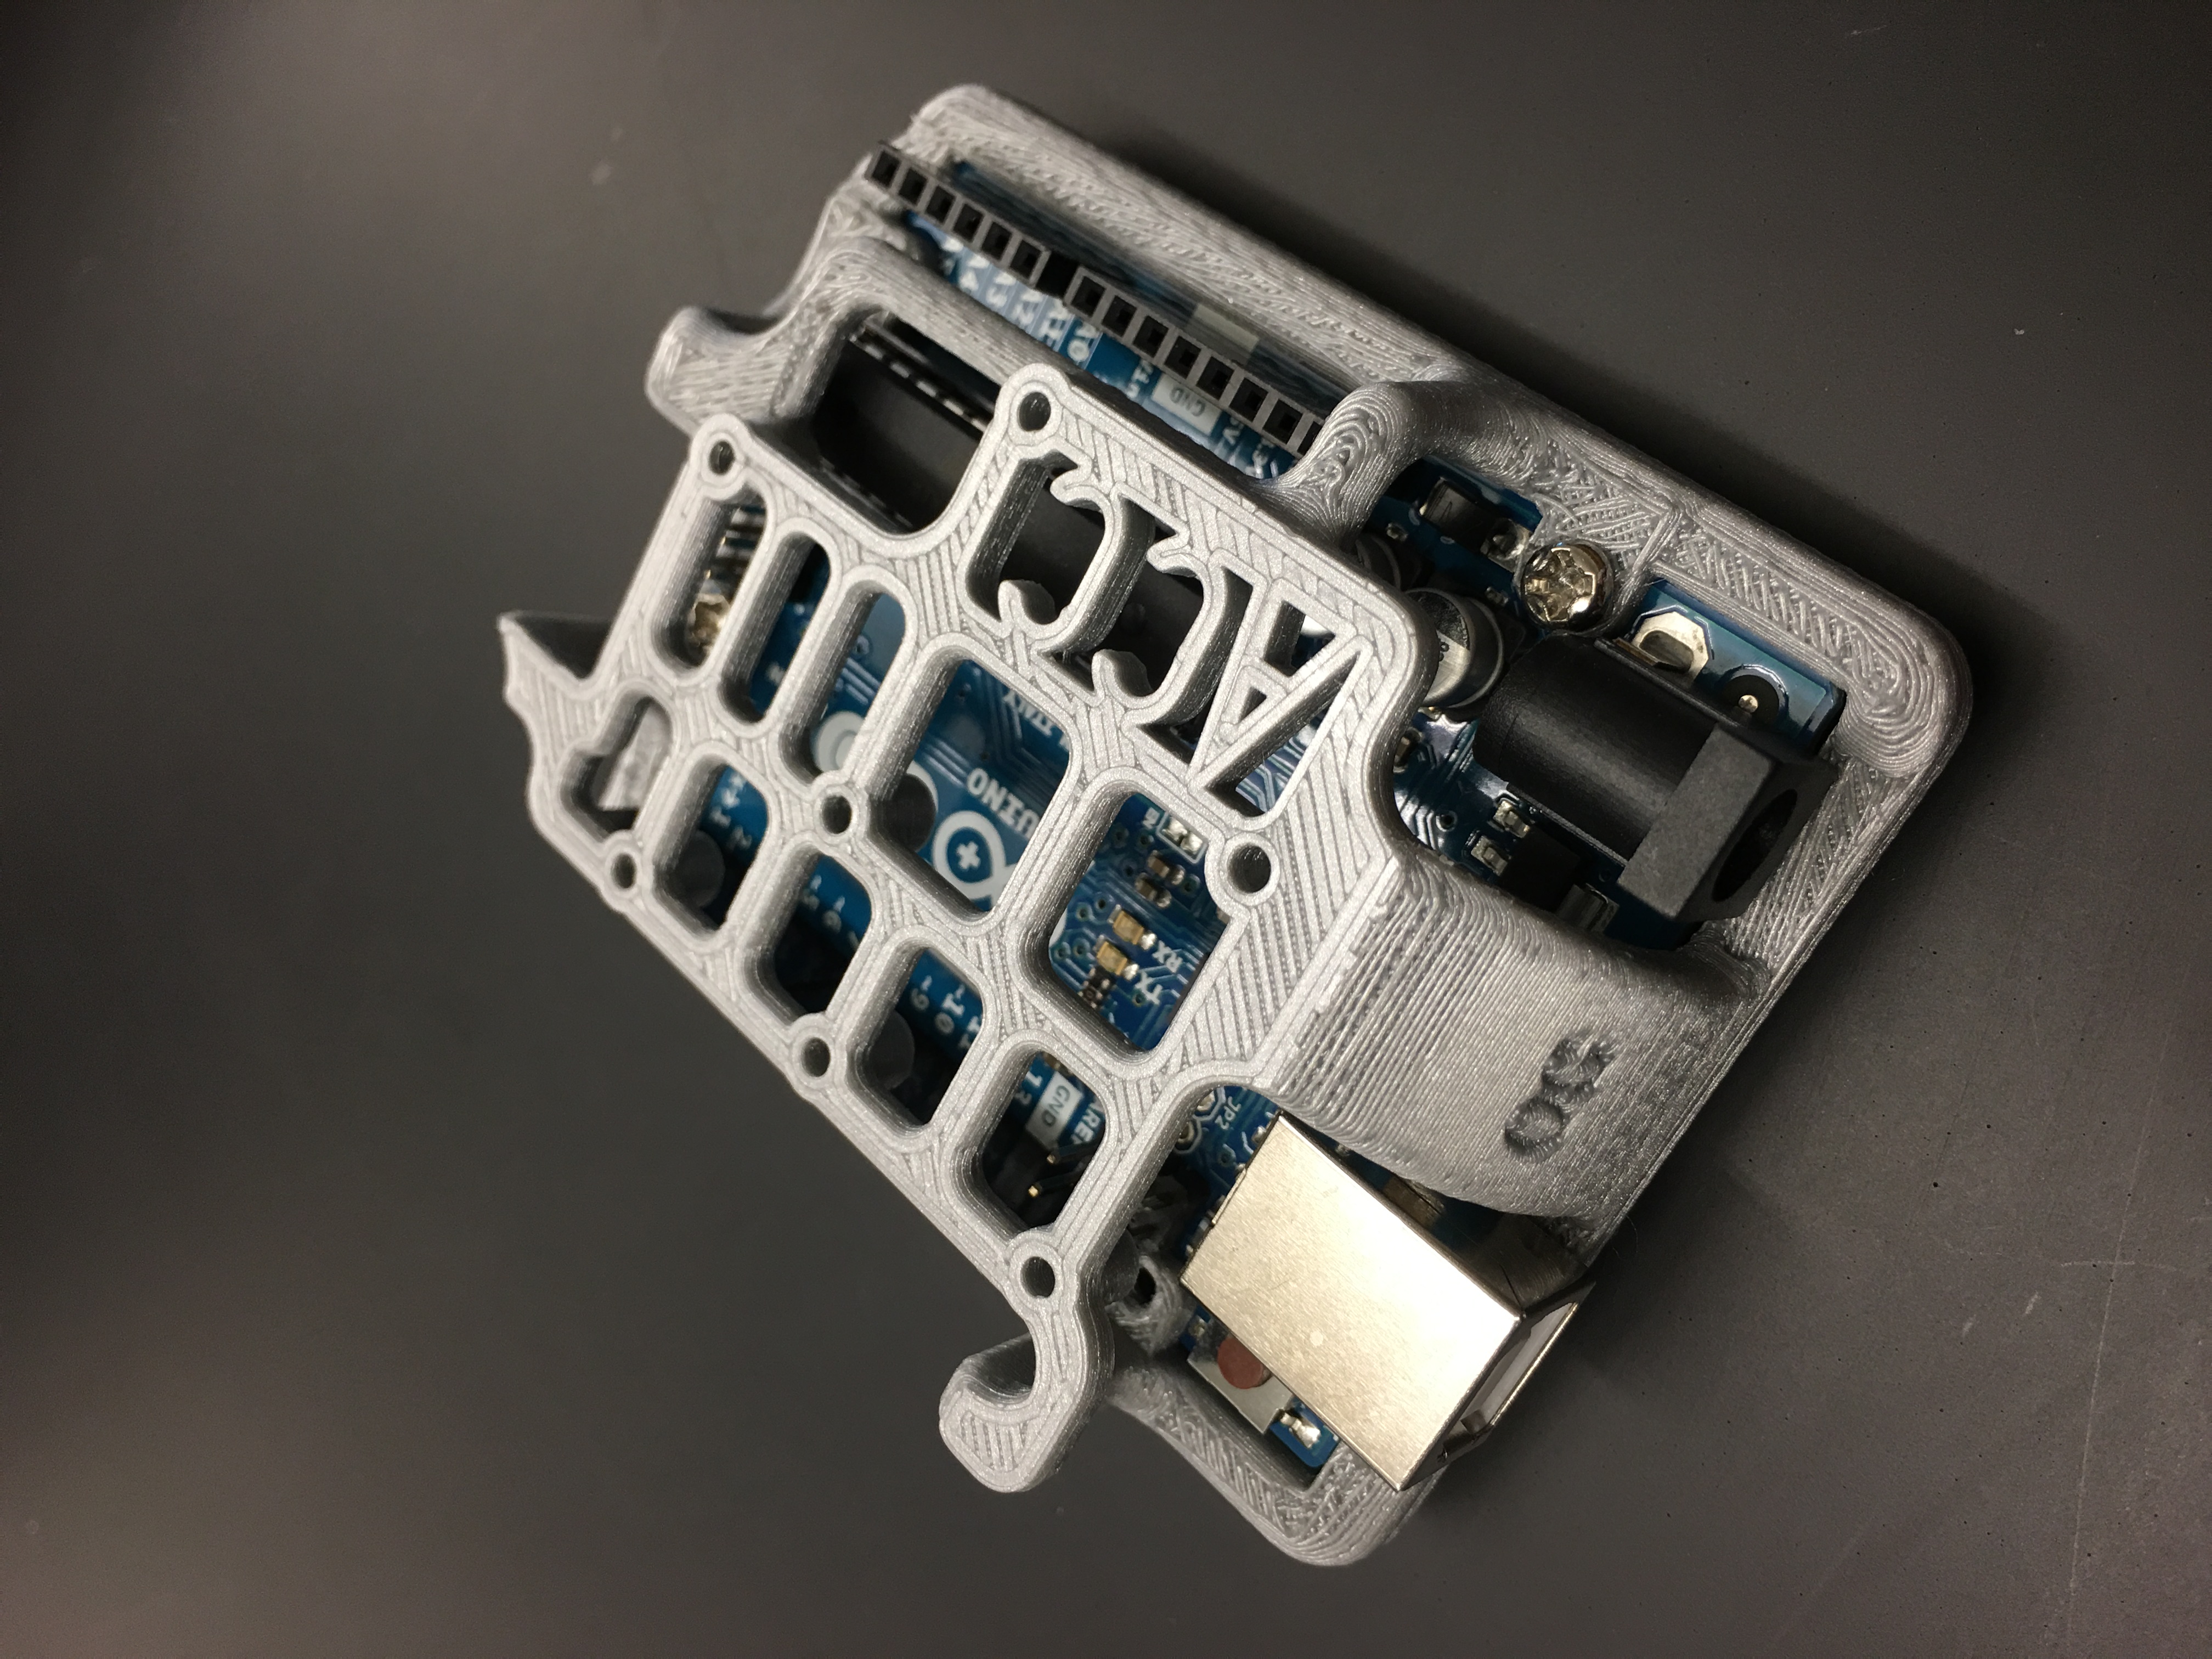 3D printed Arduino cases